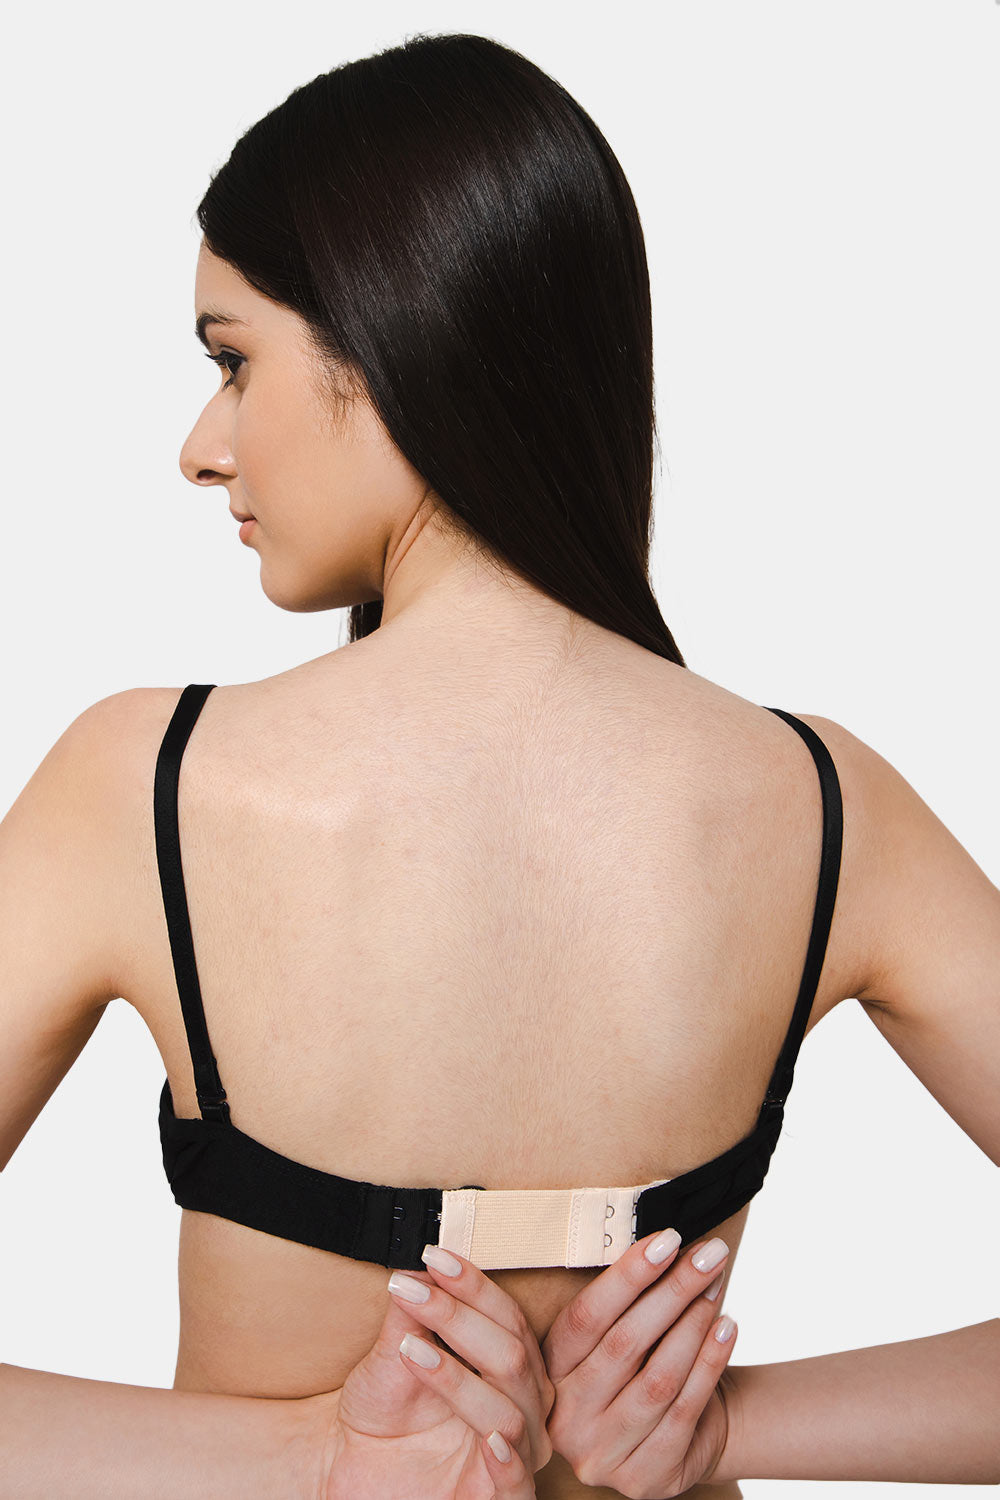 6 Pieces Women Black Bra Extenders Elastic Stretchy Bra Extension